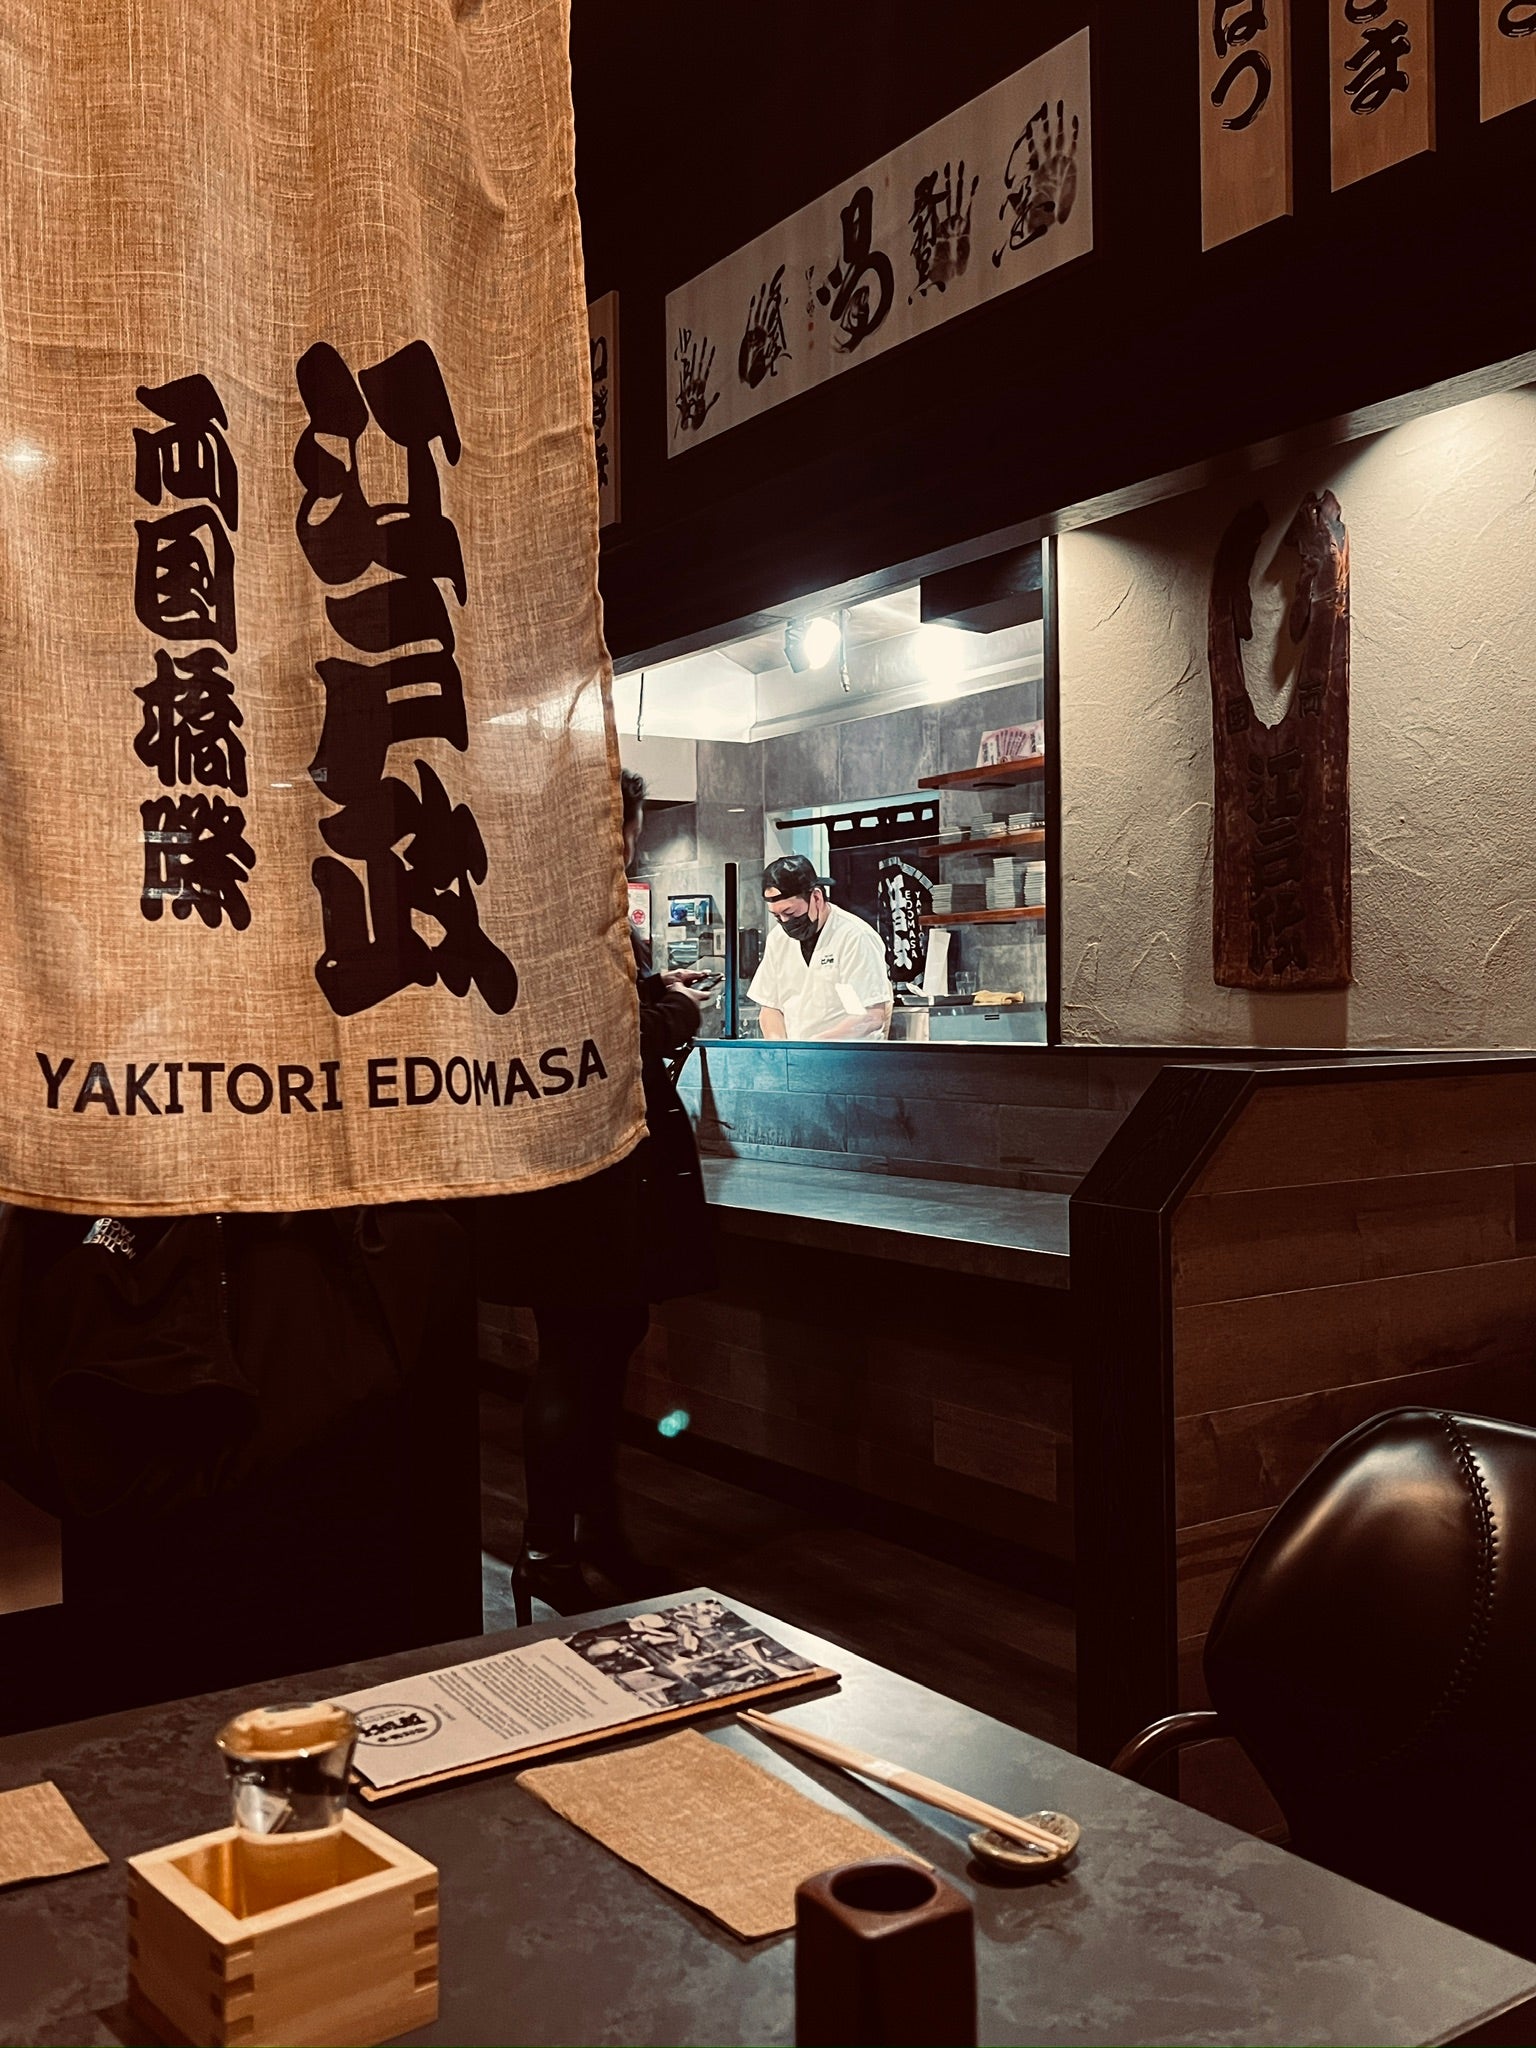 Yearning for yakitori? Visit Edomasa